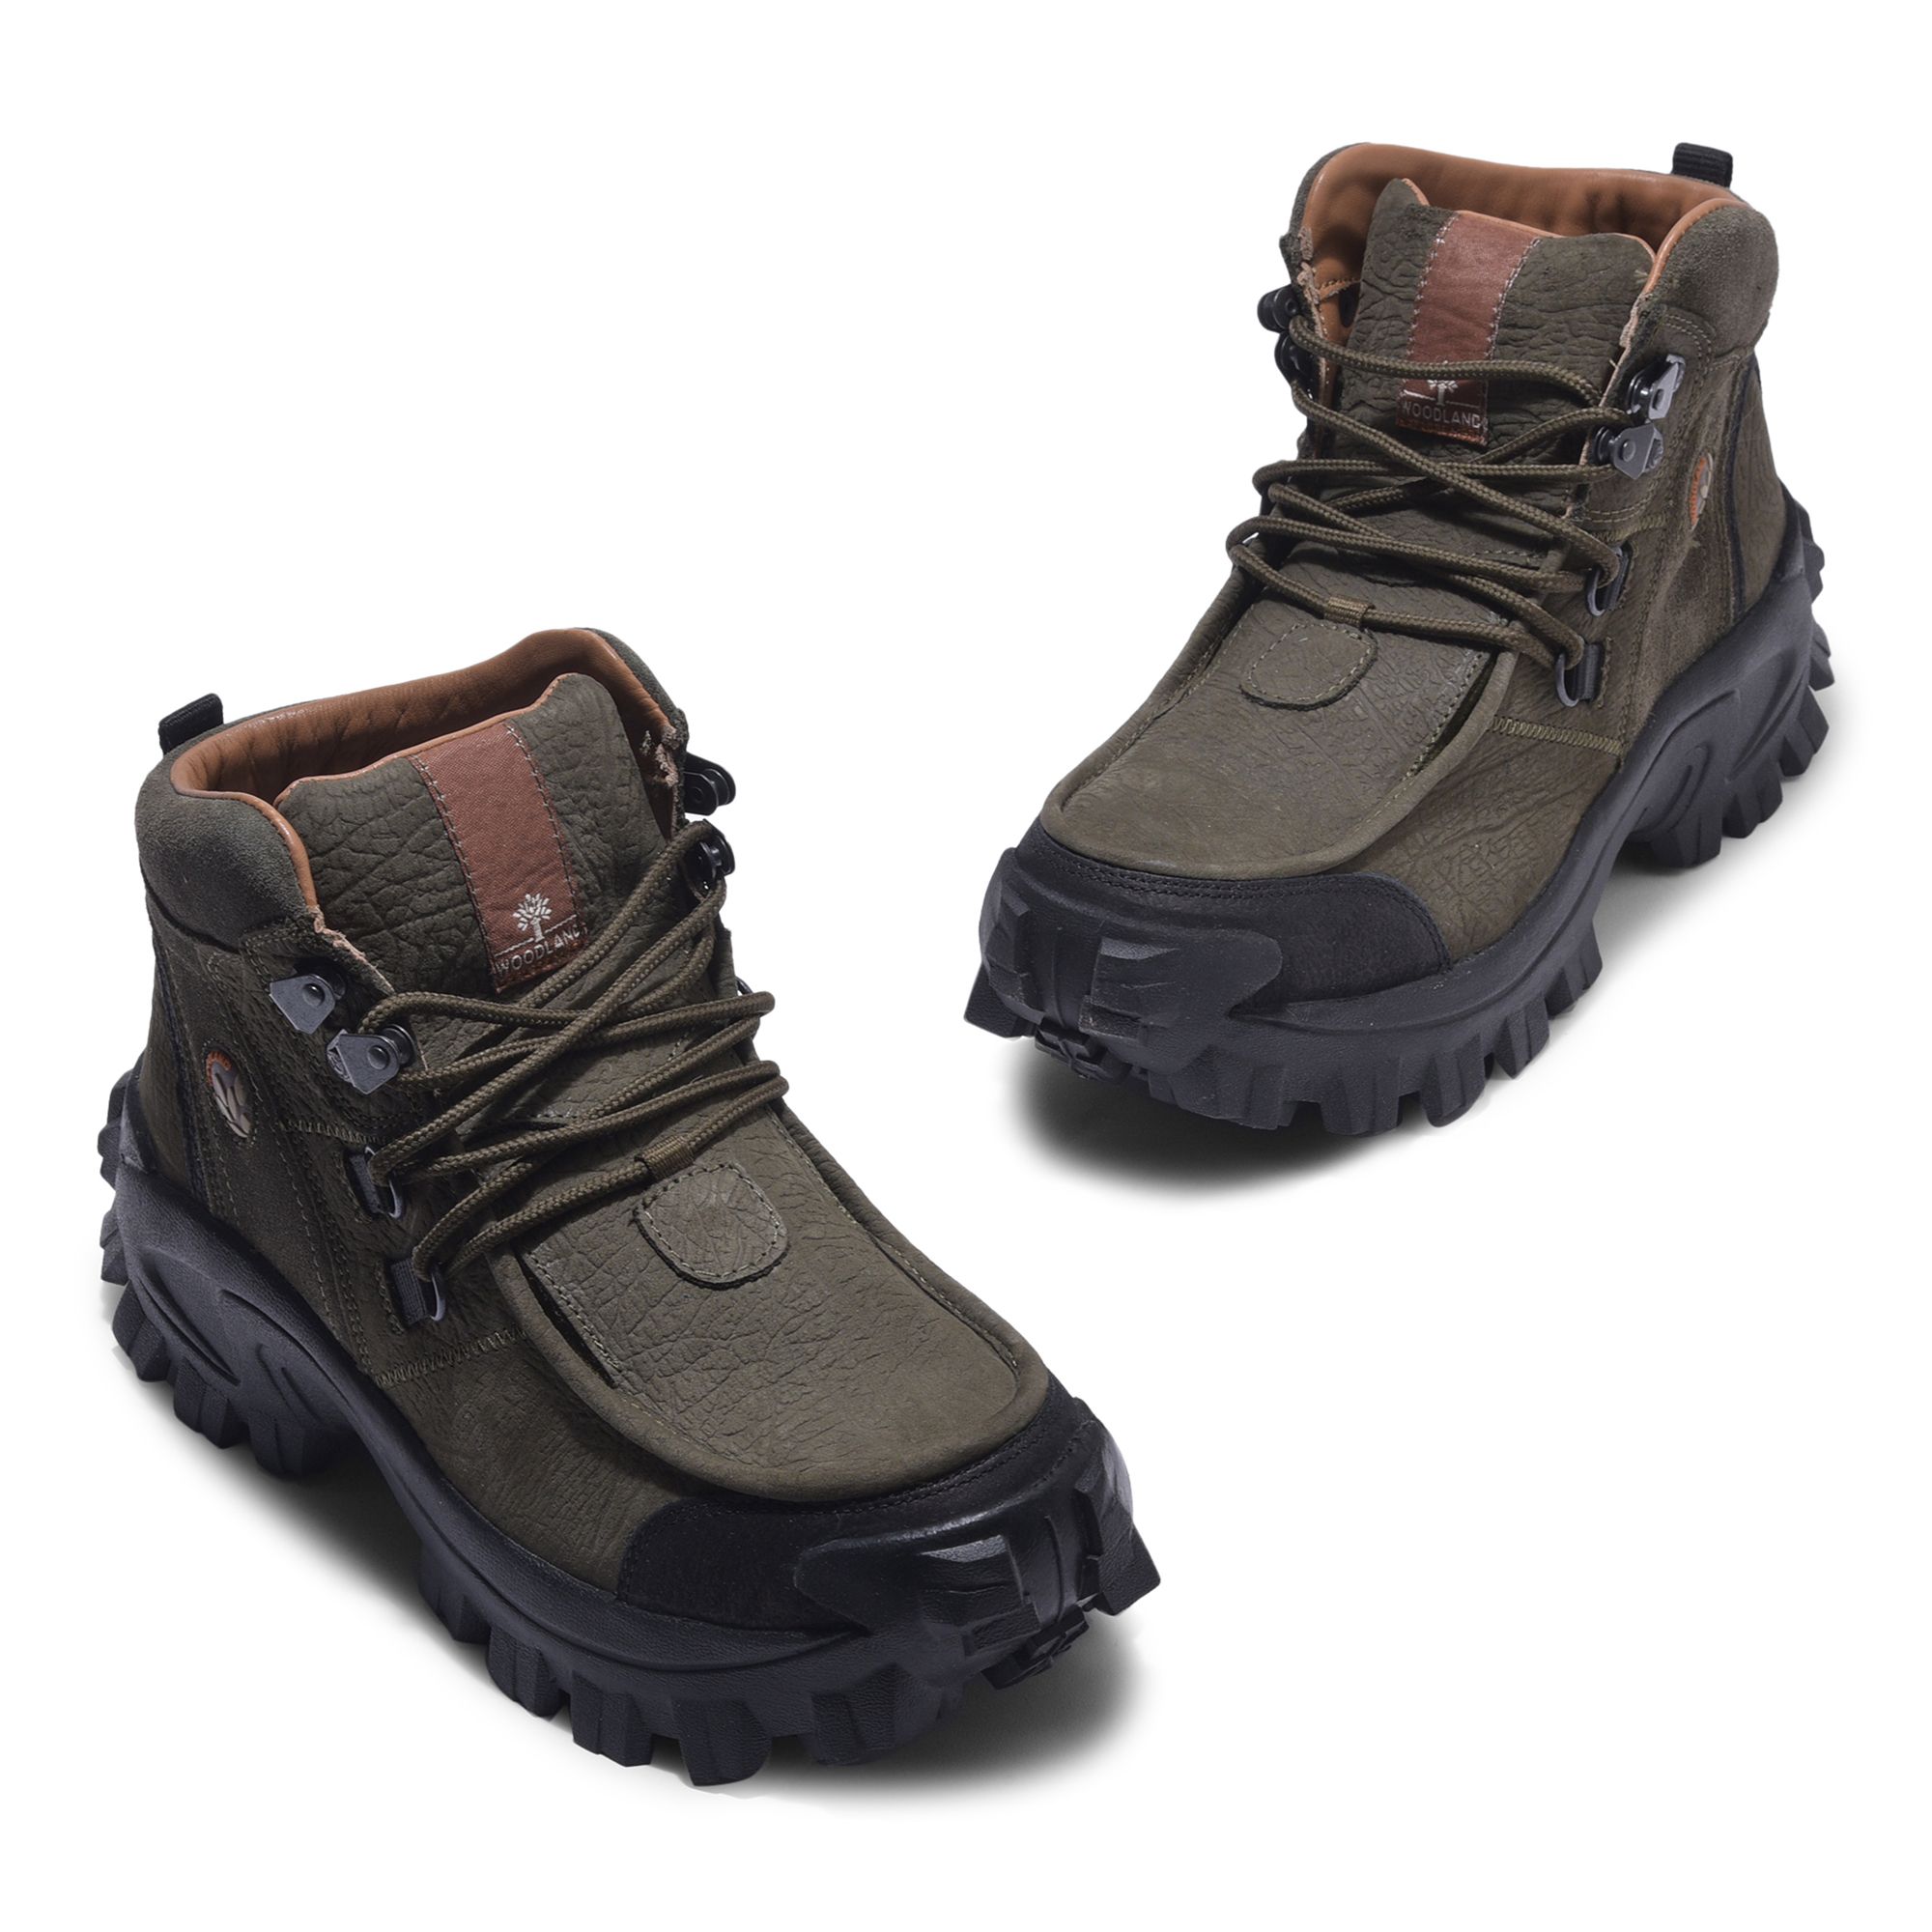 Merrell Men's Size 10 - Black Leather Jungle Moc 2 Slip On Shoes - J60889 |  eBay